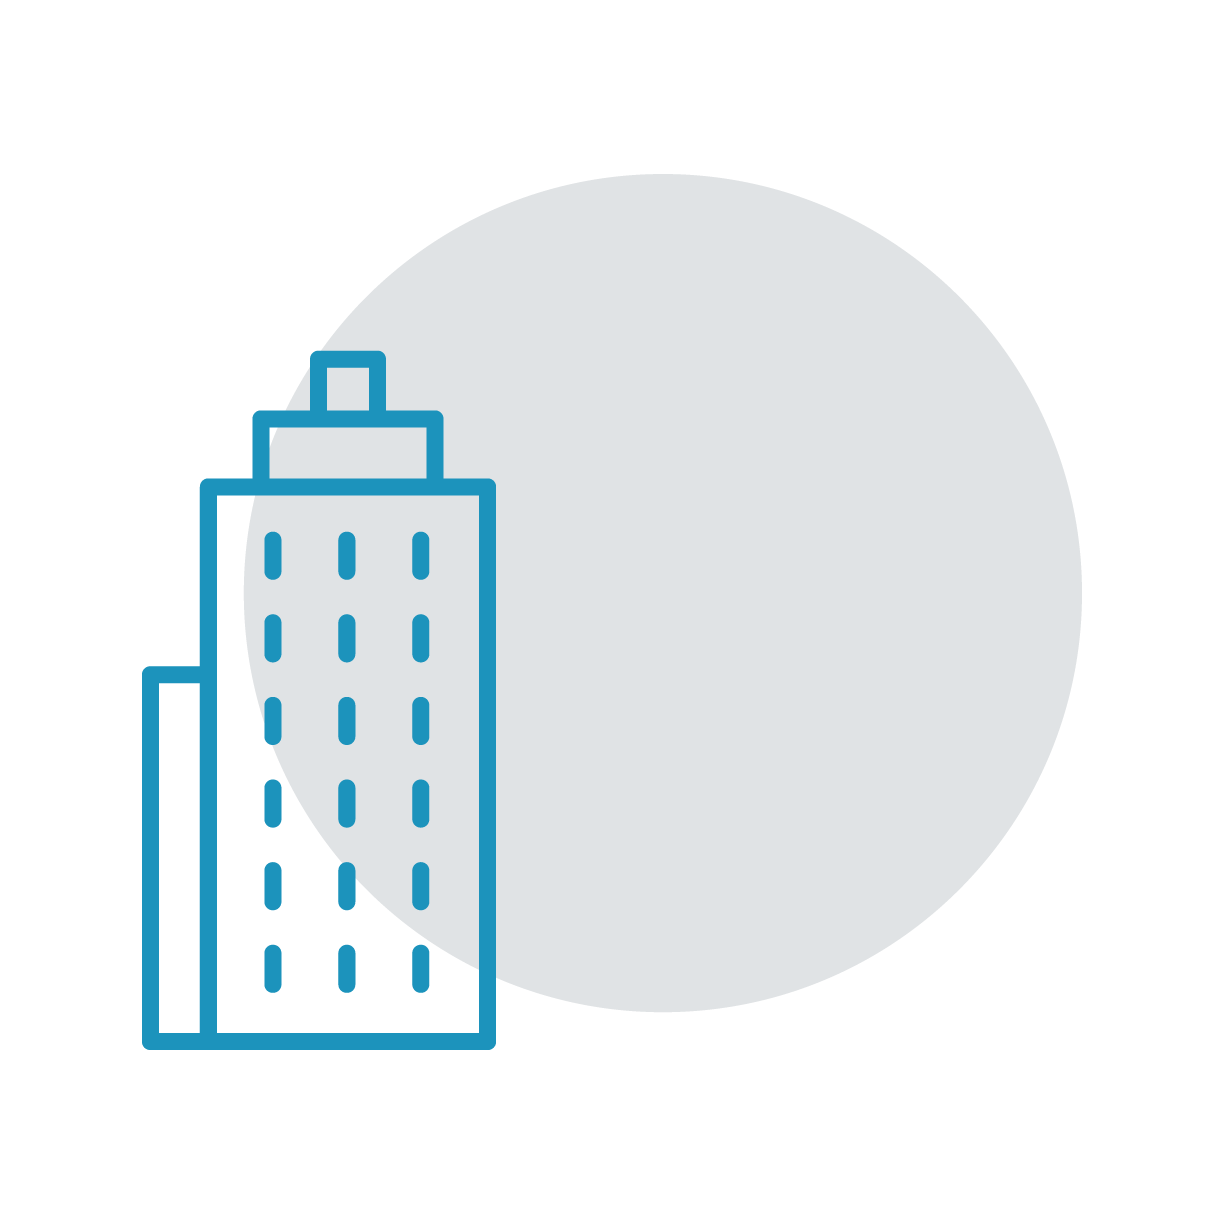 pivot-icons-grey background_Engineering + Grey Circle_city_business